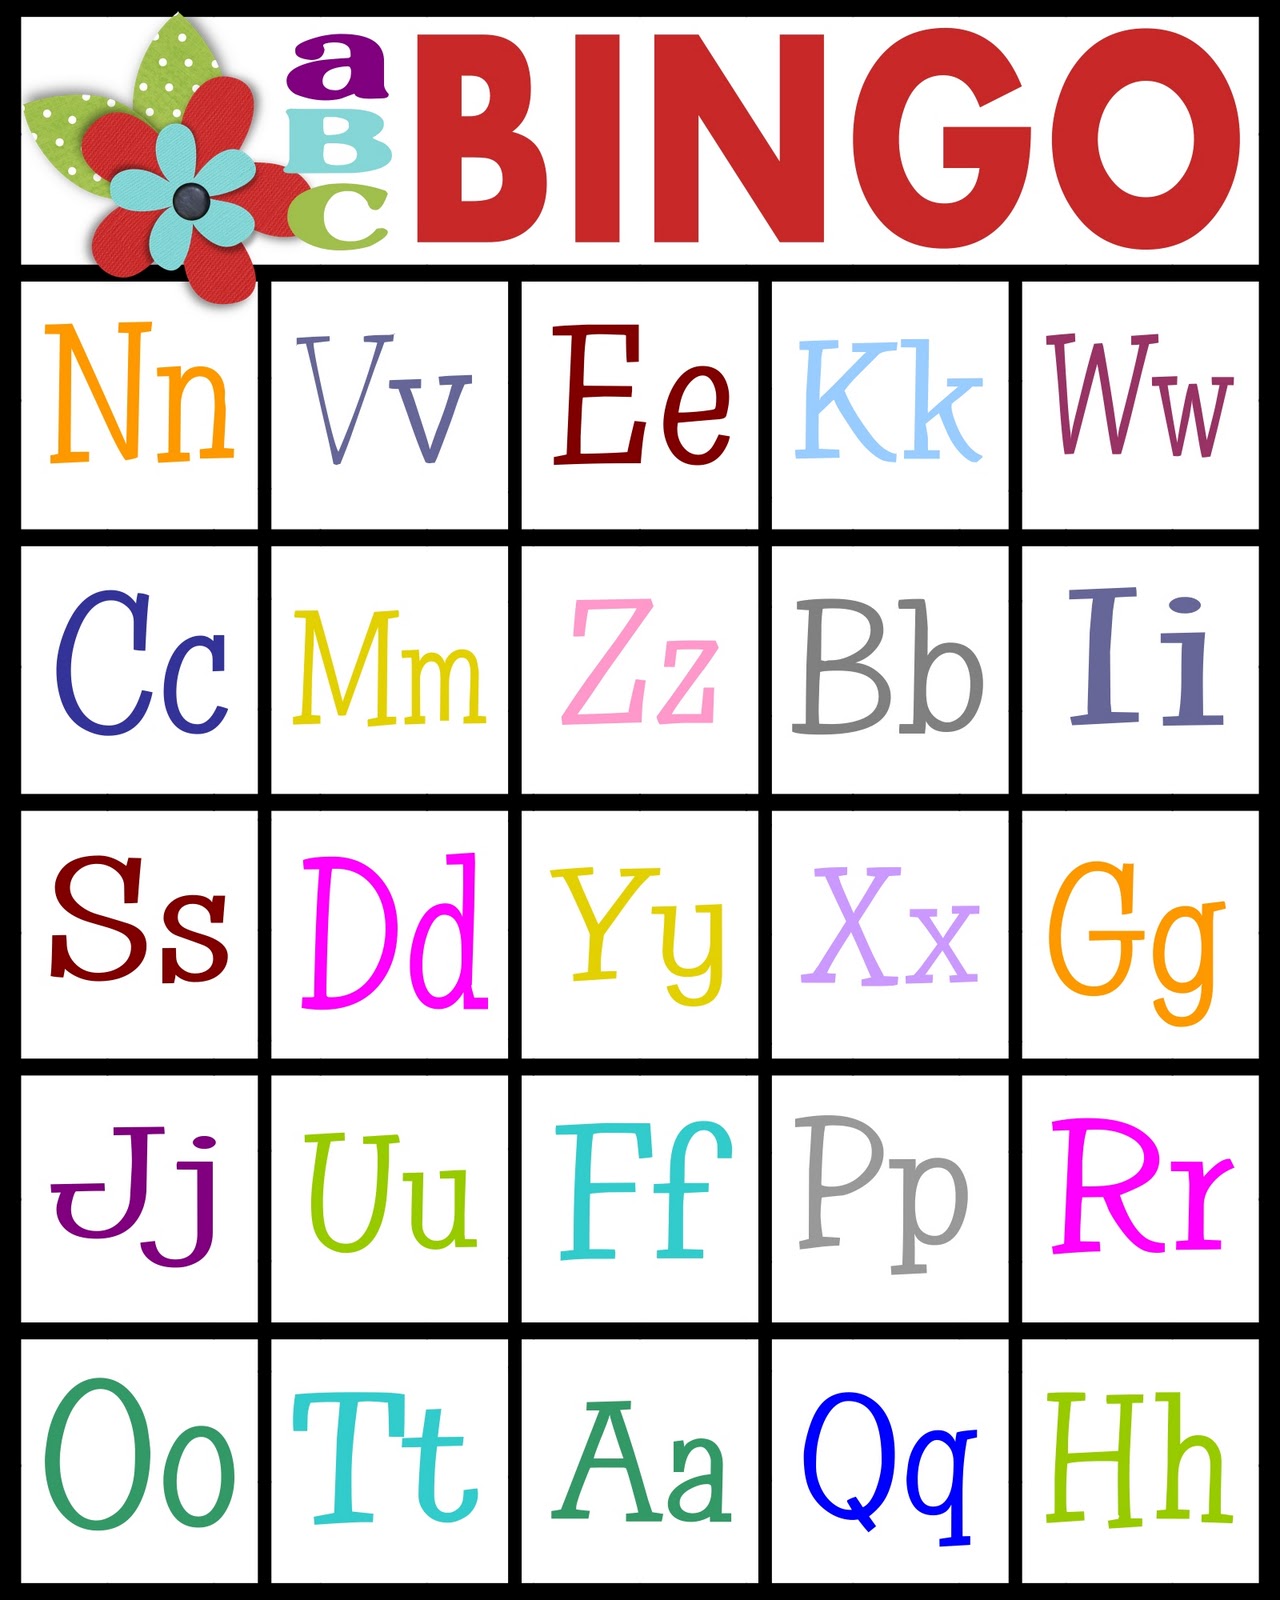 free clipart of bingo - photo #27